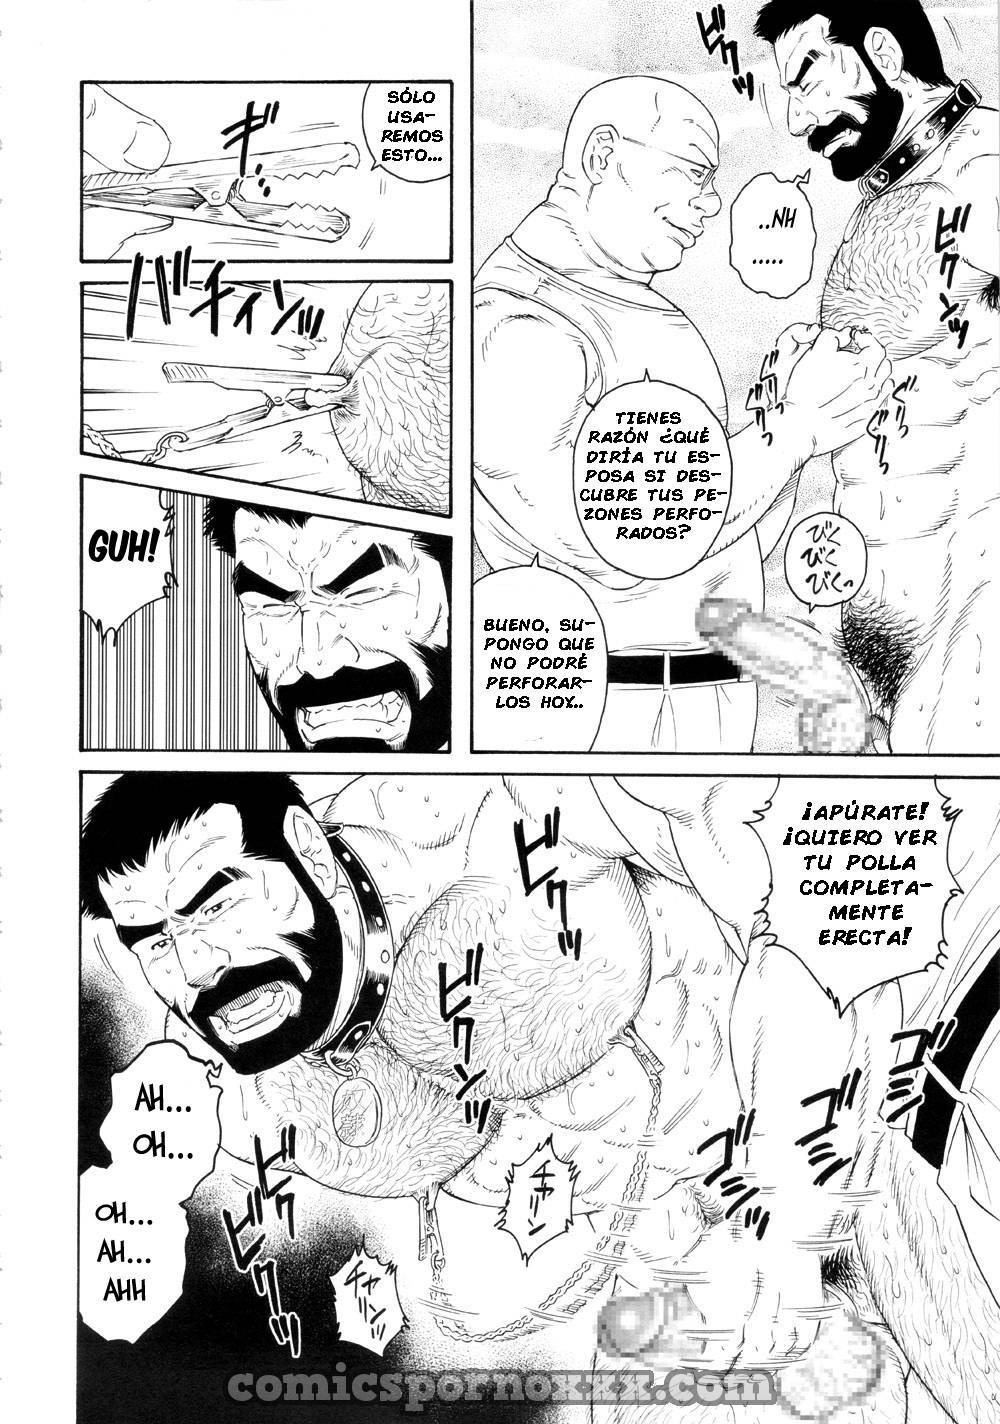 El Contrato - 13 - Comics Porno - Hentai Manga - Cartoon XXX